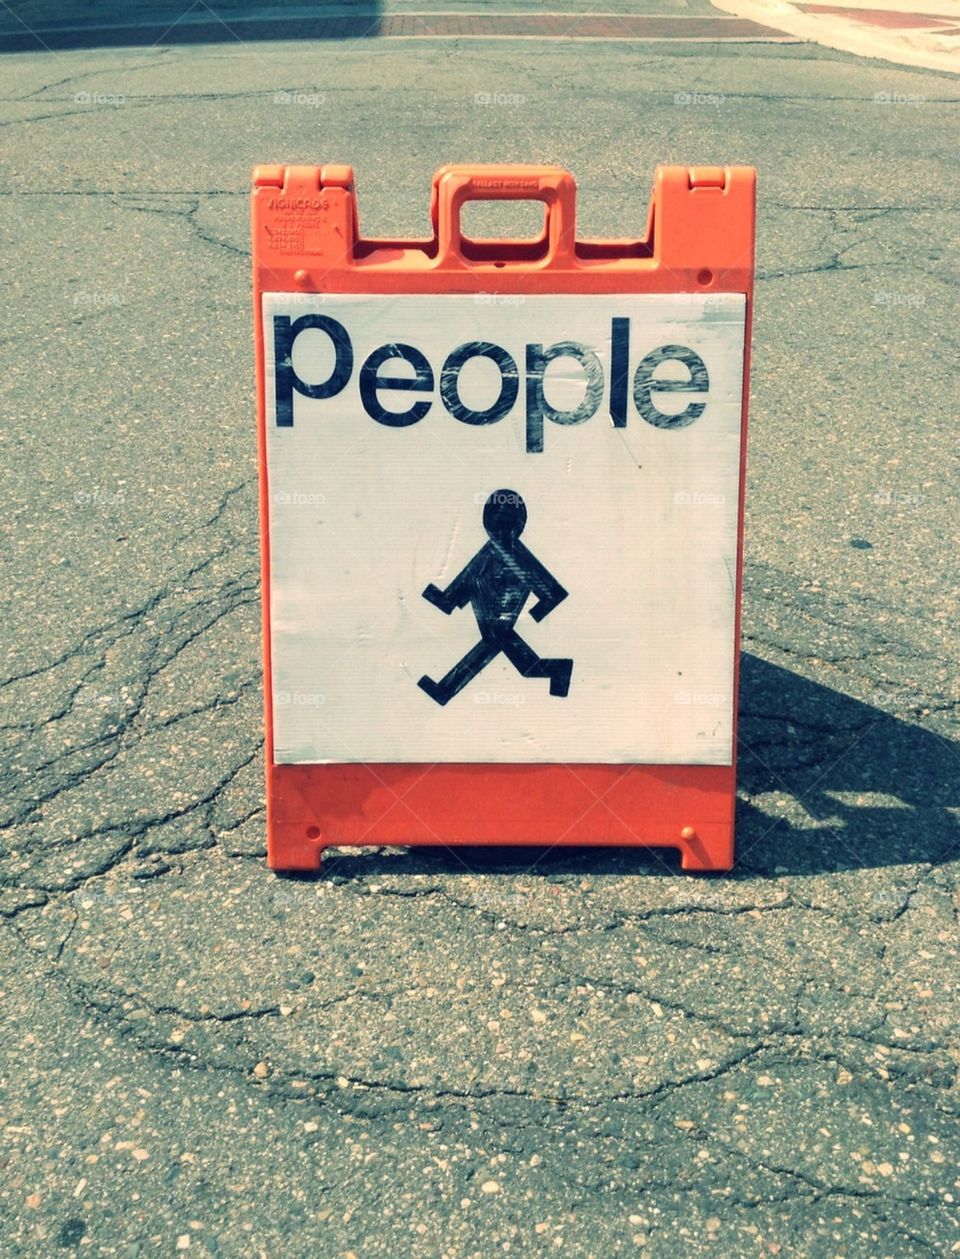 People Walking